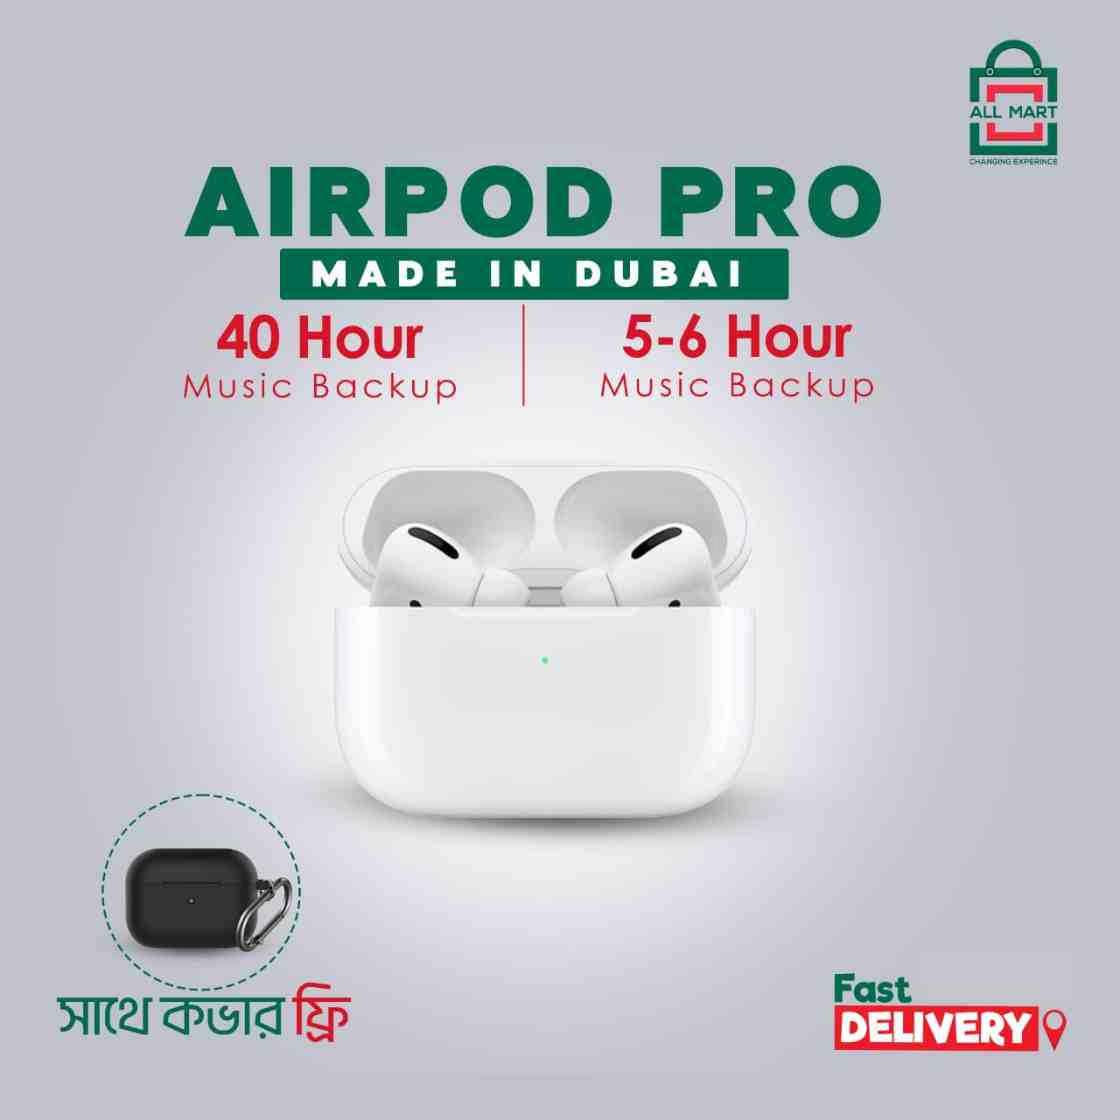 Airpod Pro (Dubai Mestar Copy) - Premium Audio with MagSafe & 40-Hour